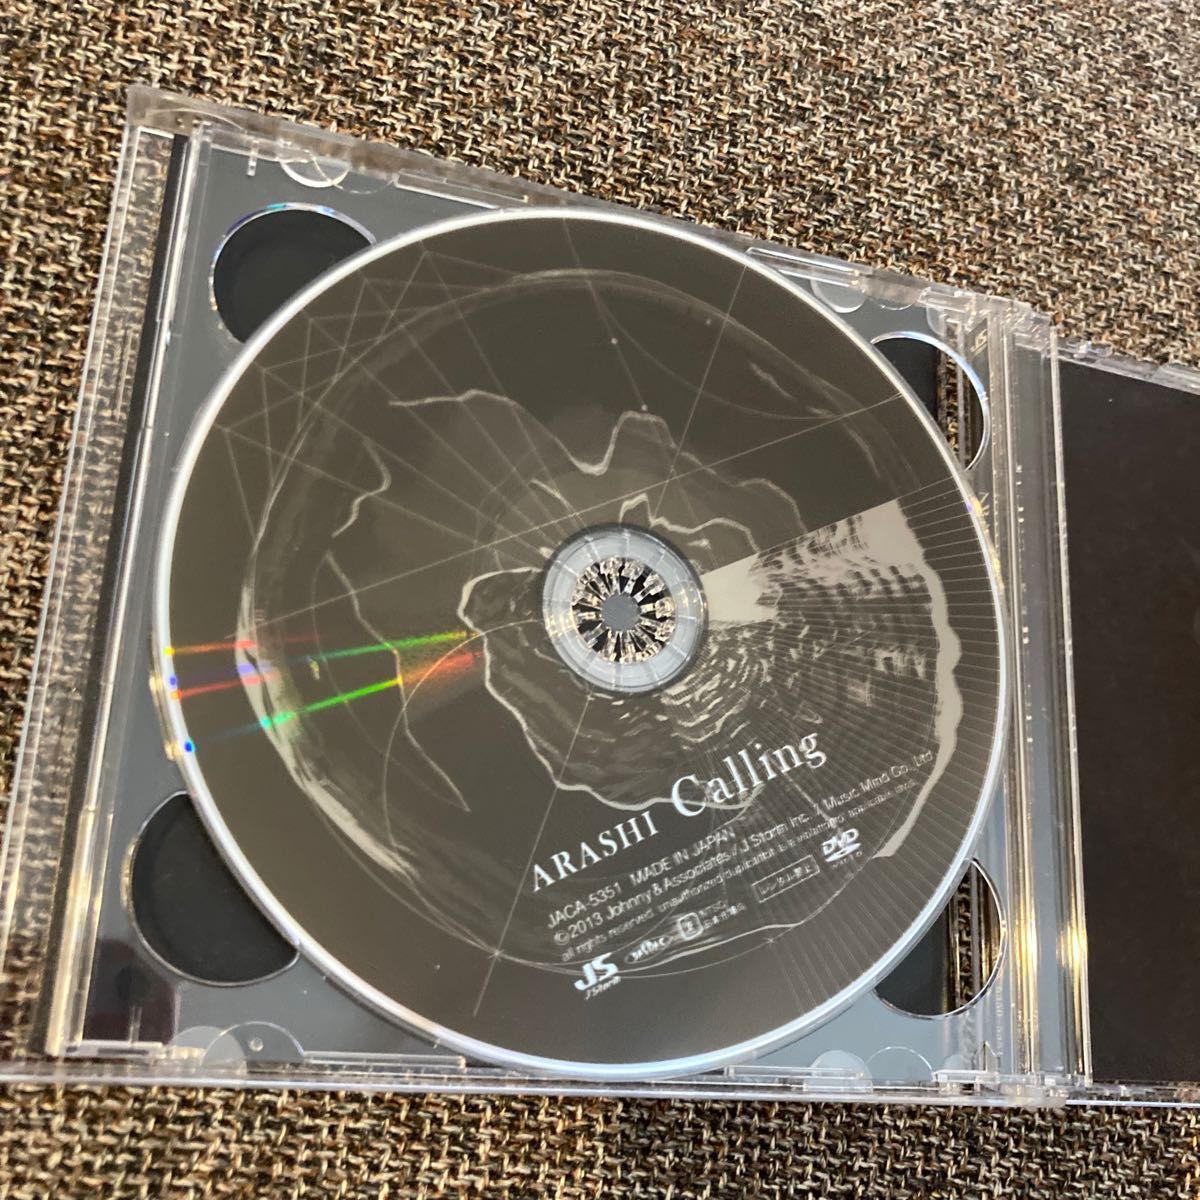 嵐ARASHI  Calling×Breathless CD+DVD